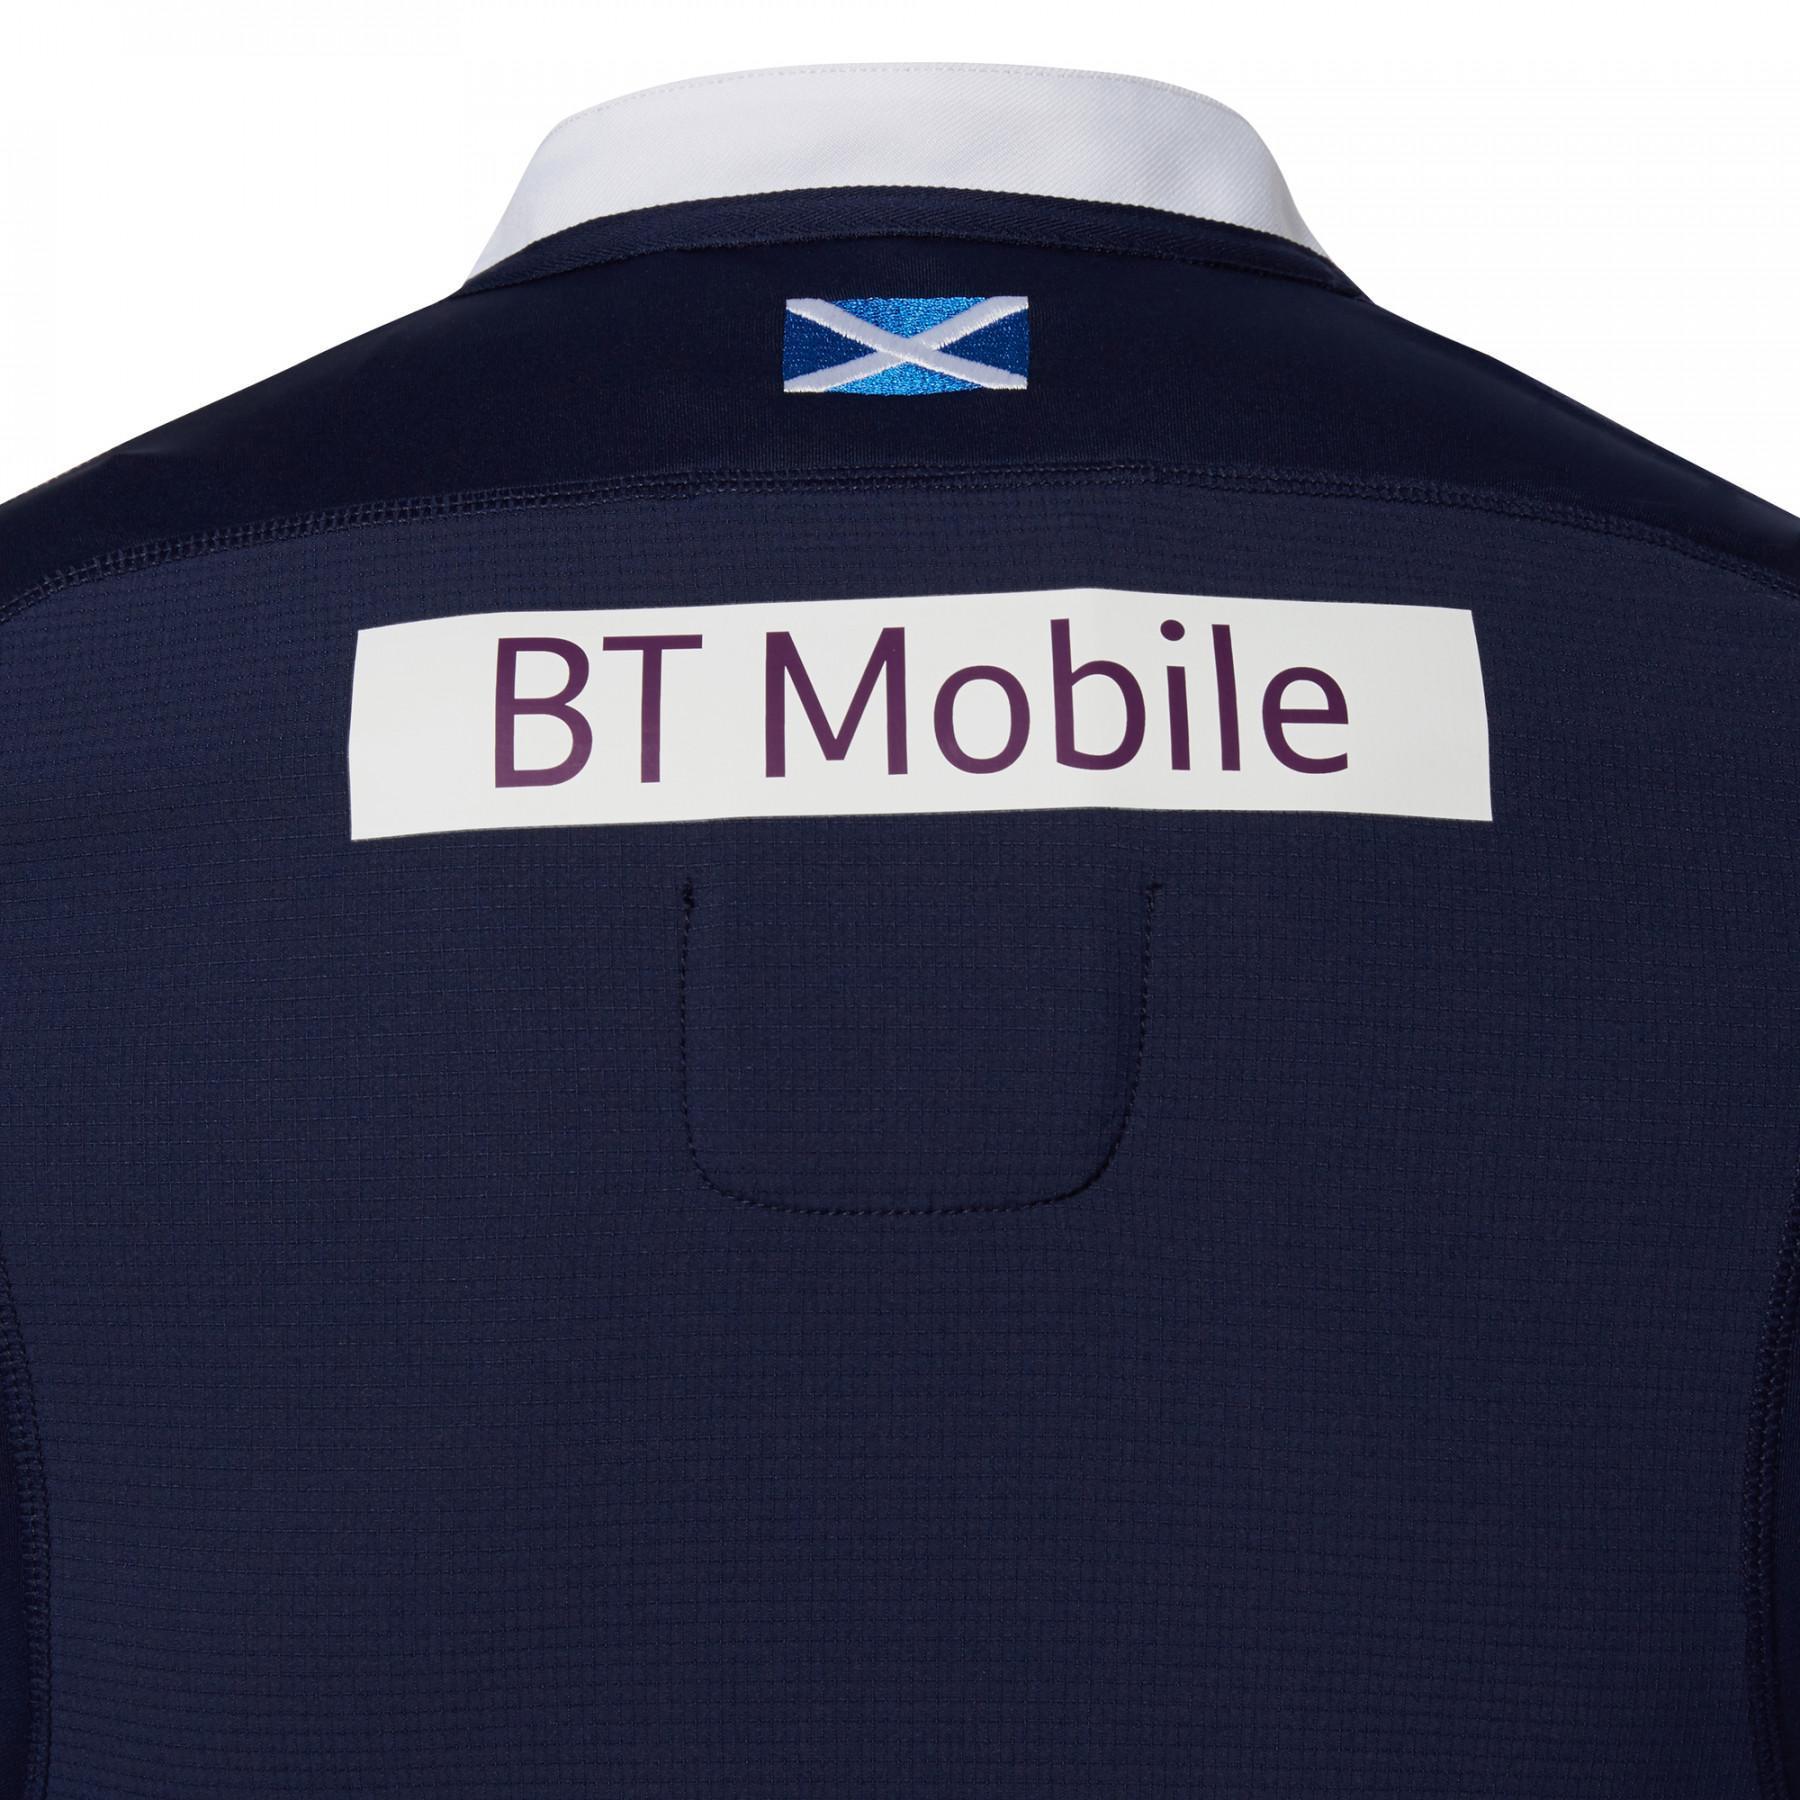 Camiseta auténtica de casa Écosse Rugby 2017-2018